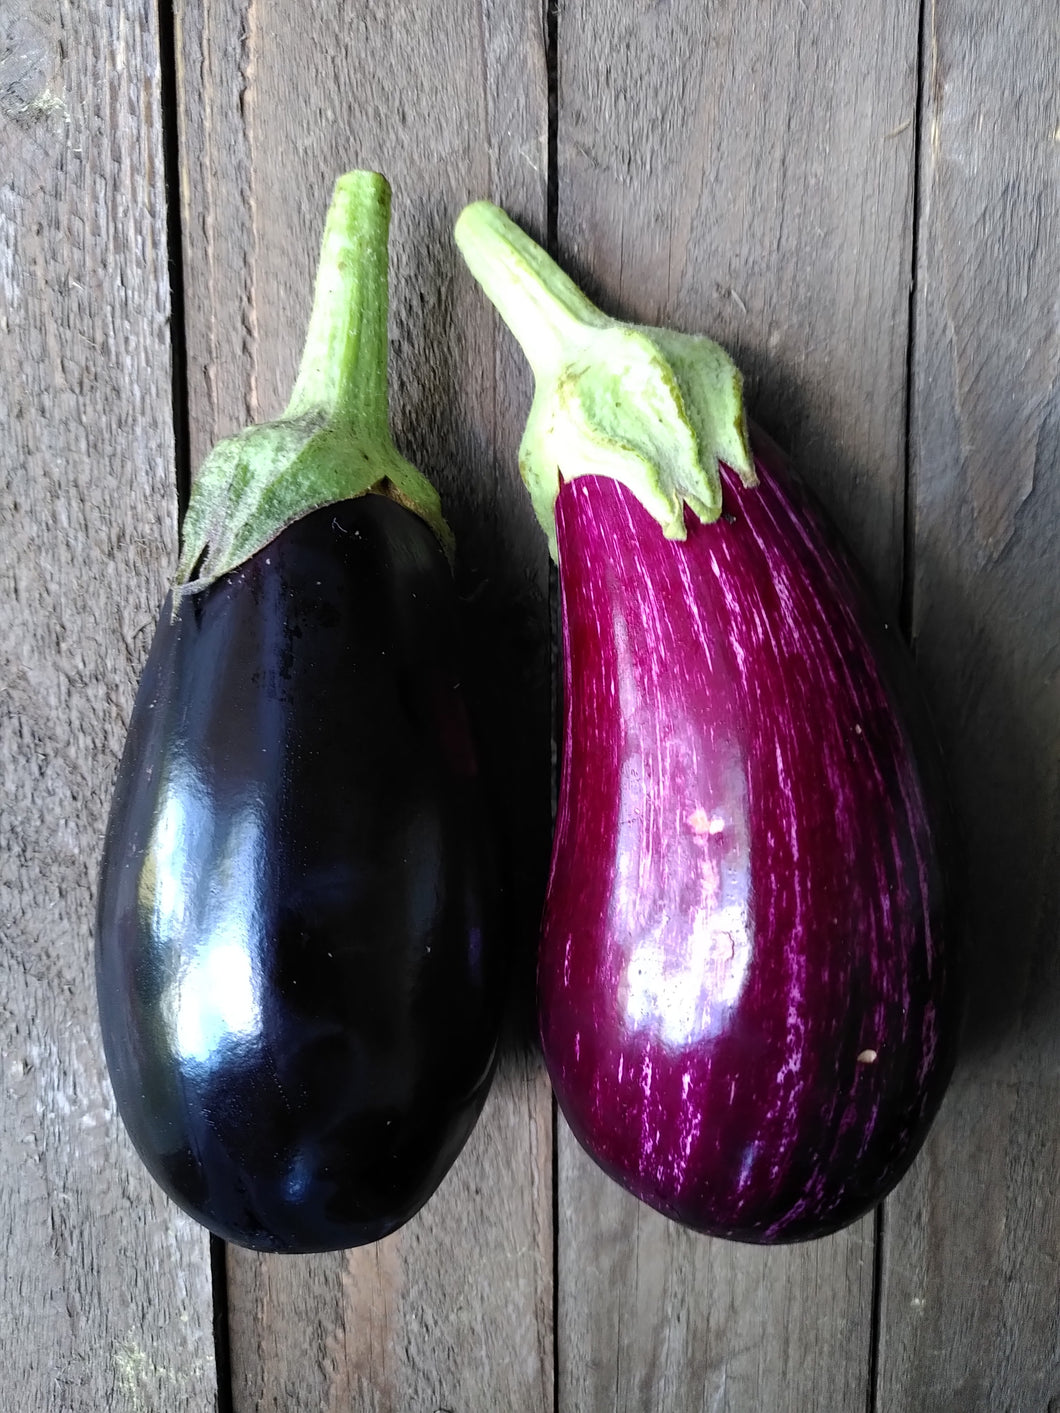 Add On - Italian Style Eggplant